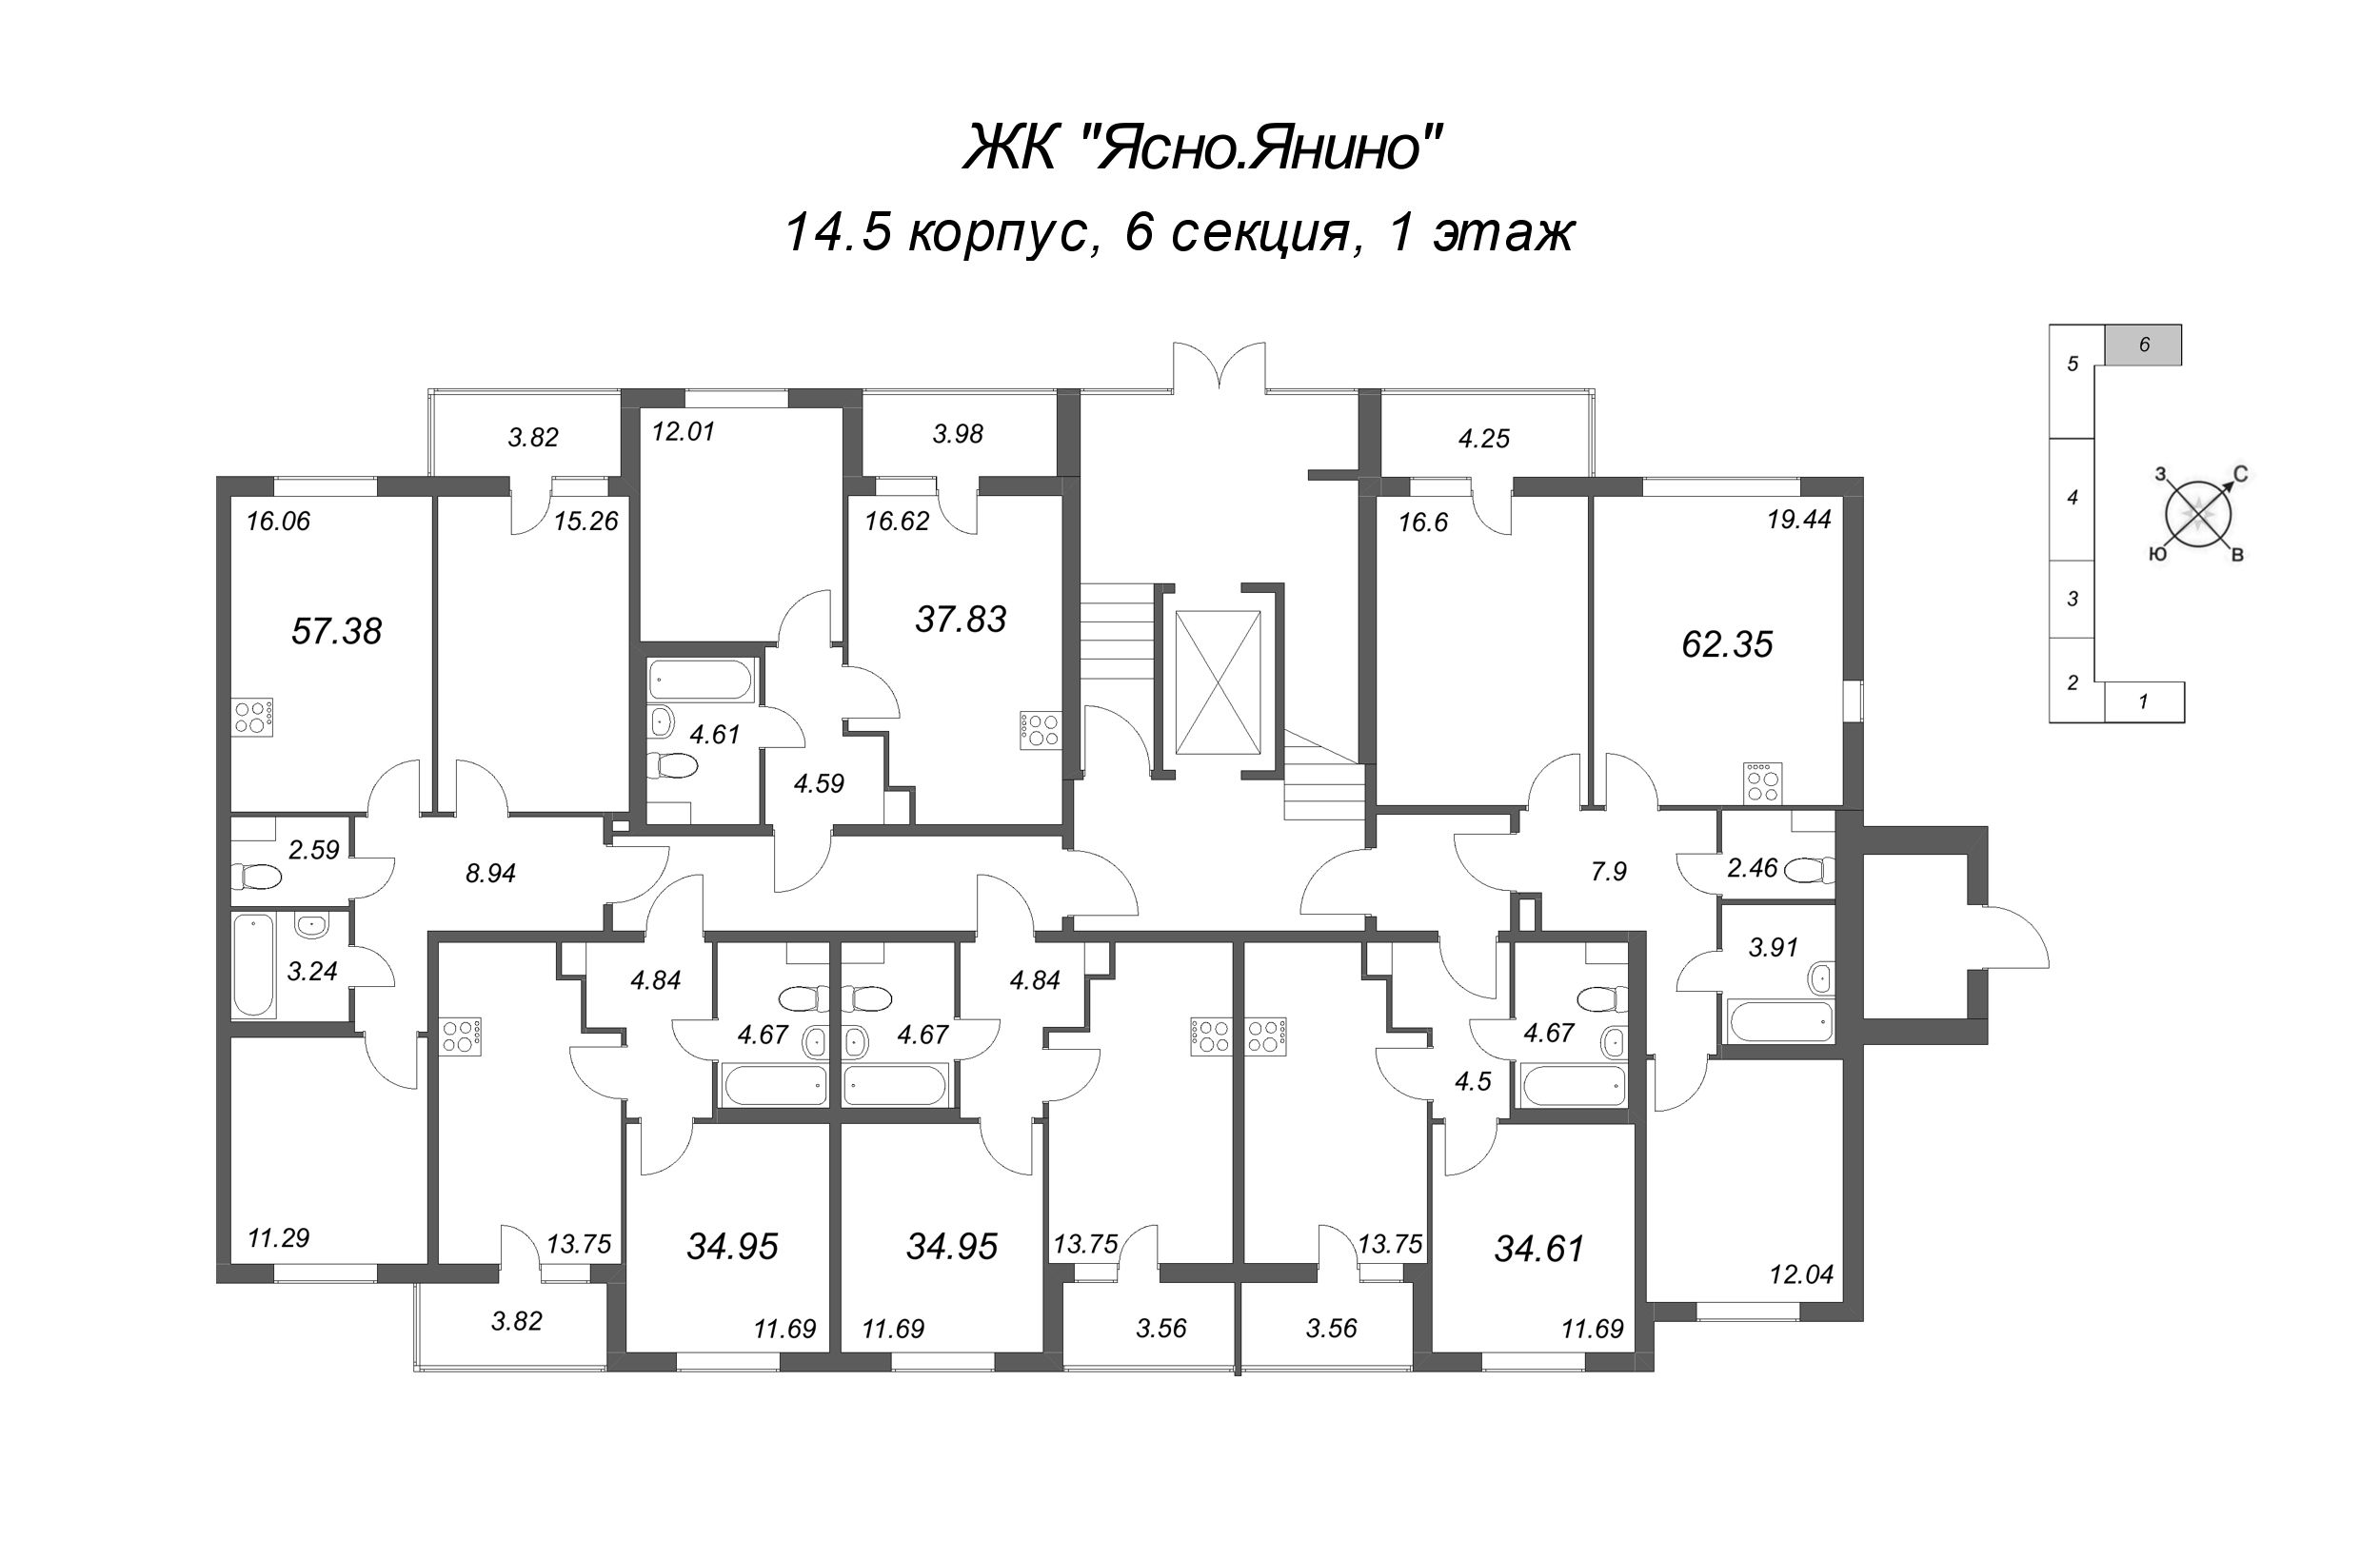 3-комнатная (Евро) квартира, 57.38 м² - планировка этажа